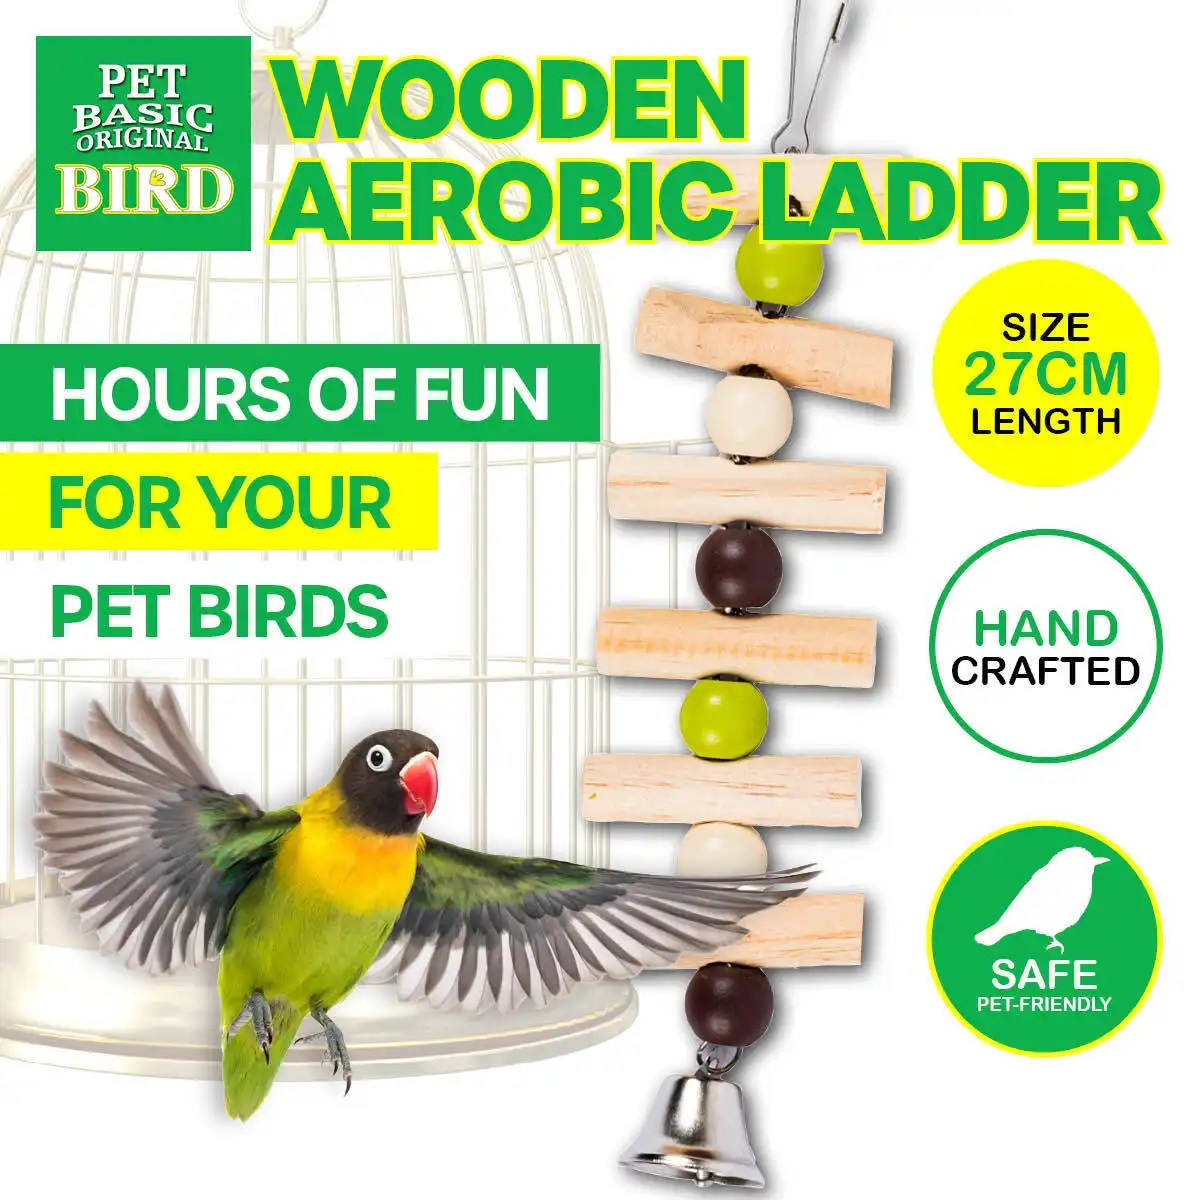 Pet Basic® Wooden Aerobic Ladder Bird Fun Stimulating Playful Beads 27cm